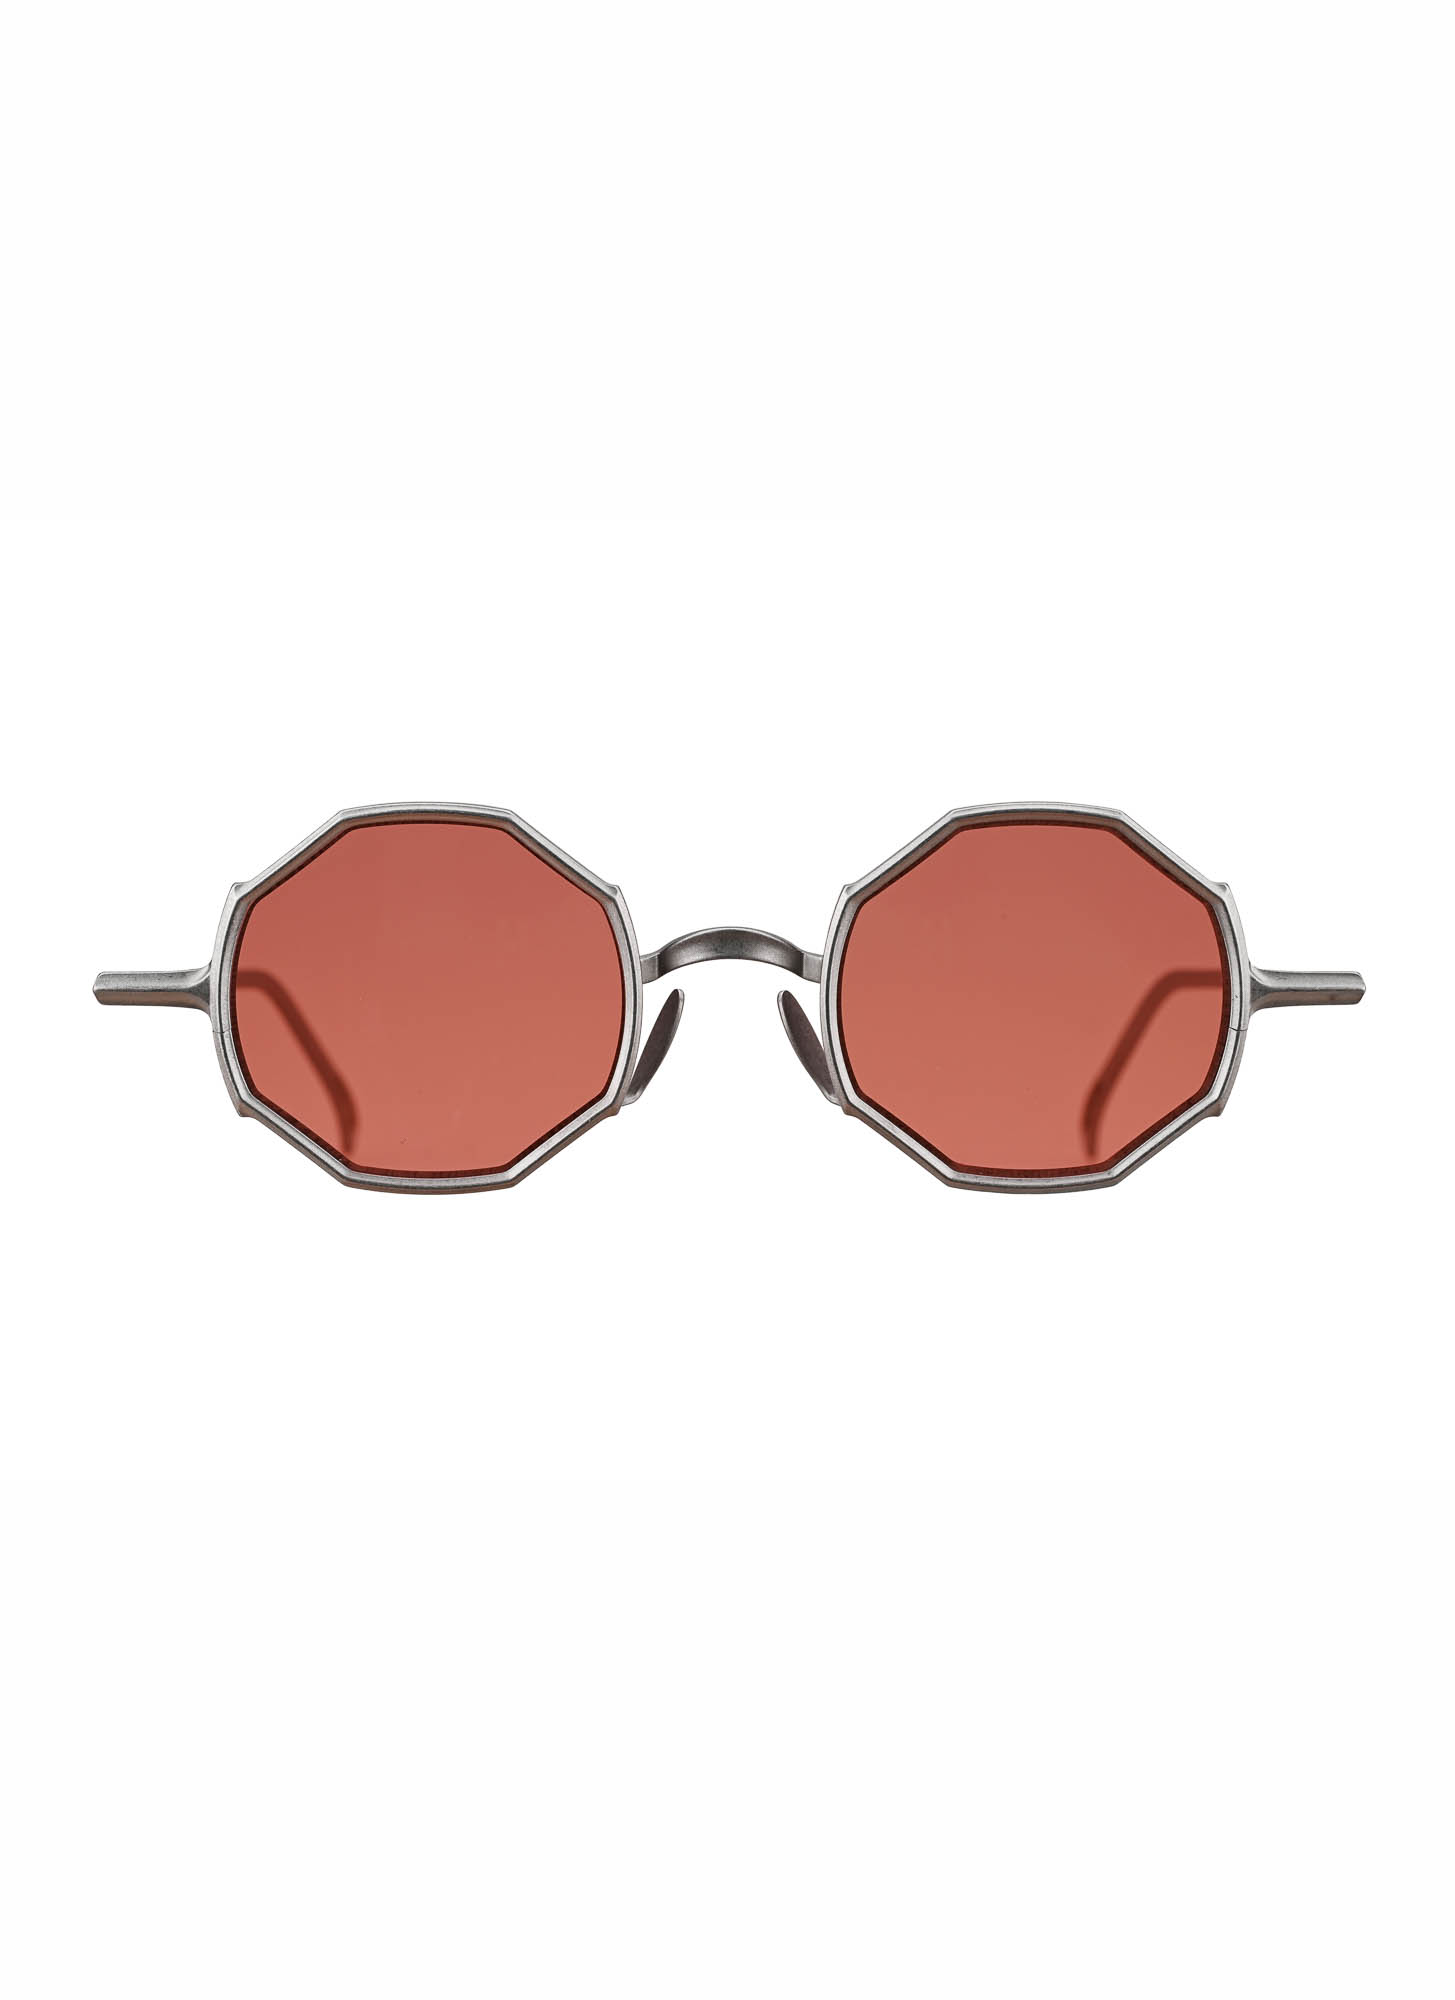 https://www.hide-m.com/wp-content/uploads/2022/08/RIGARDS-RG0088ST-Sun-Glasses-Sunglasses-Eyewear-Brille-Sonnenbrille-vintage-grey-rouge-lens-stainless-steel-hide-m-1.jpg